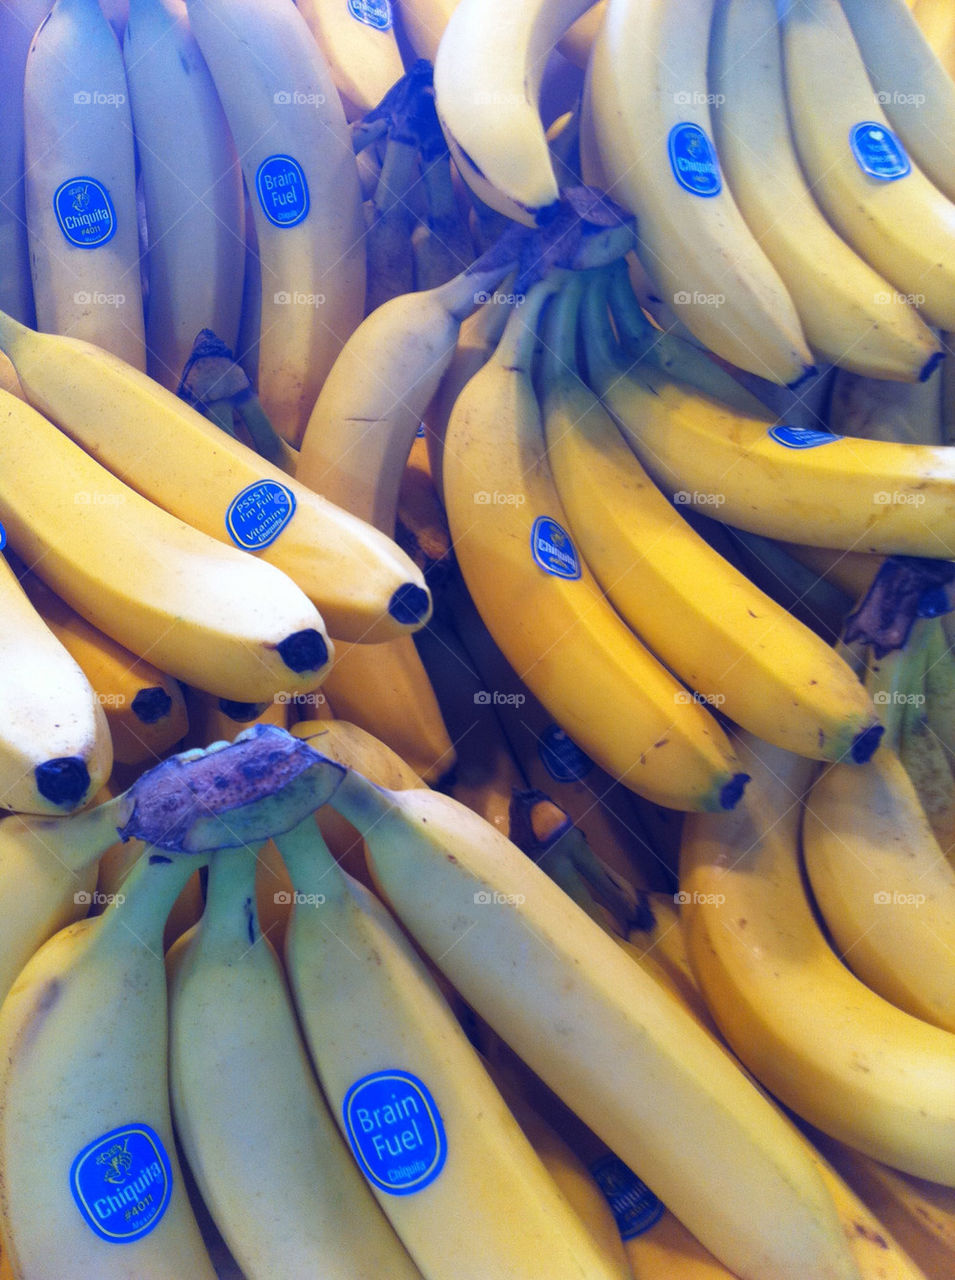 yellow bananas bunches chiquita by tplips01